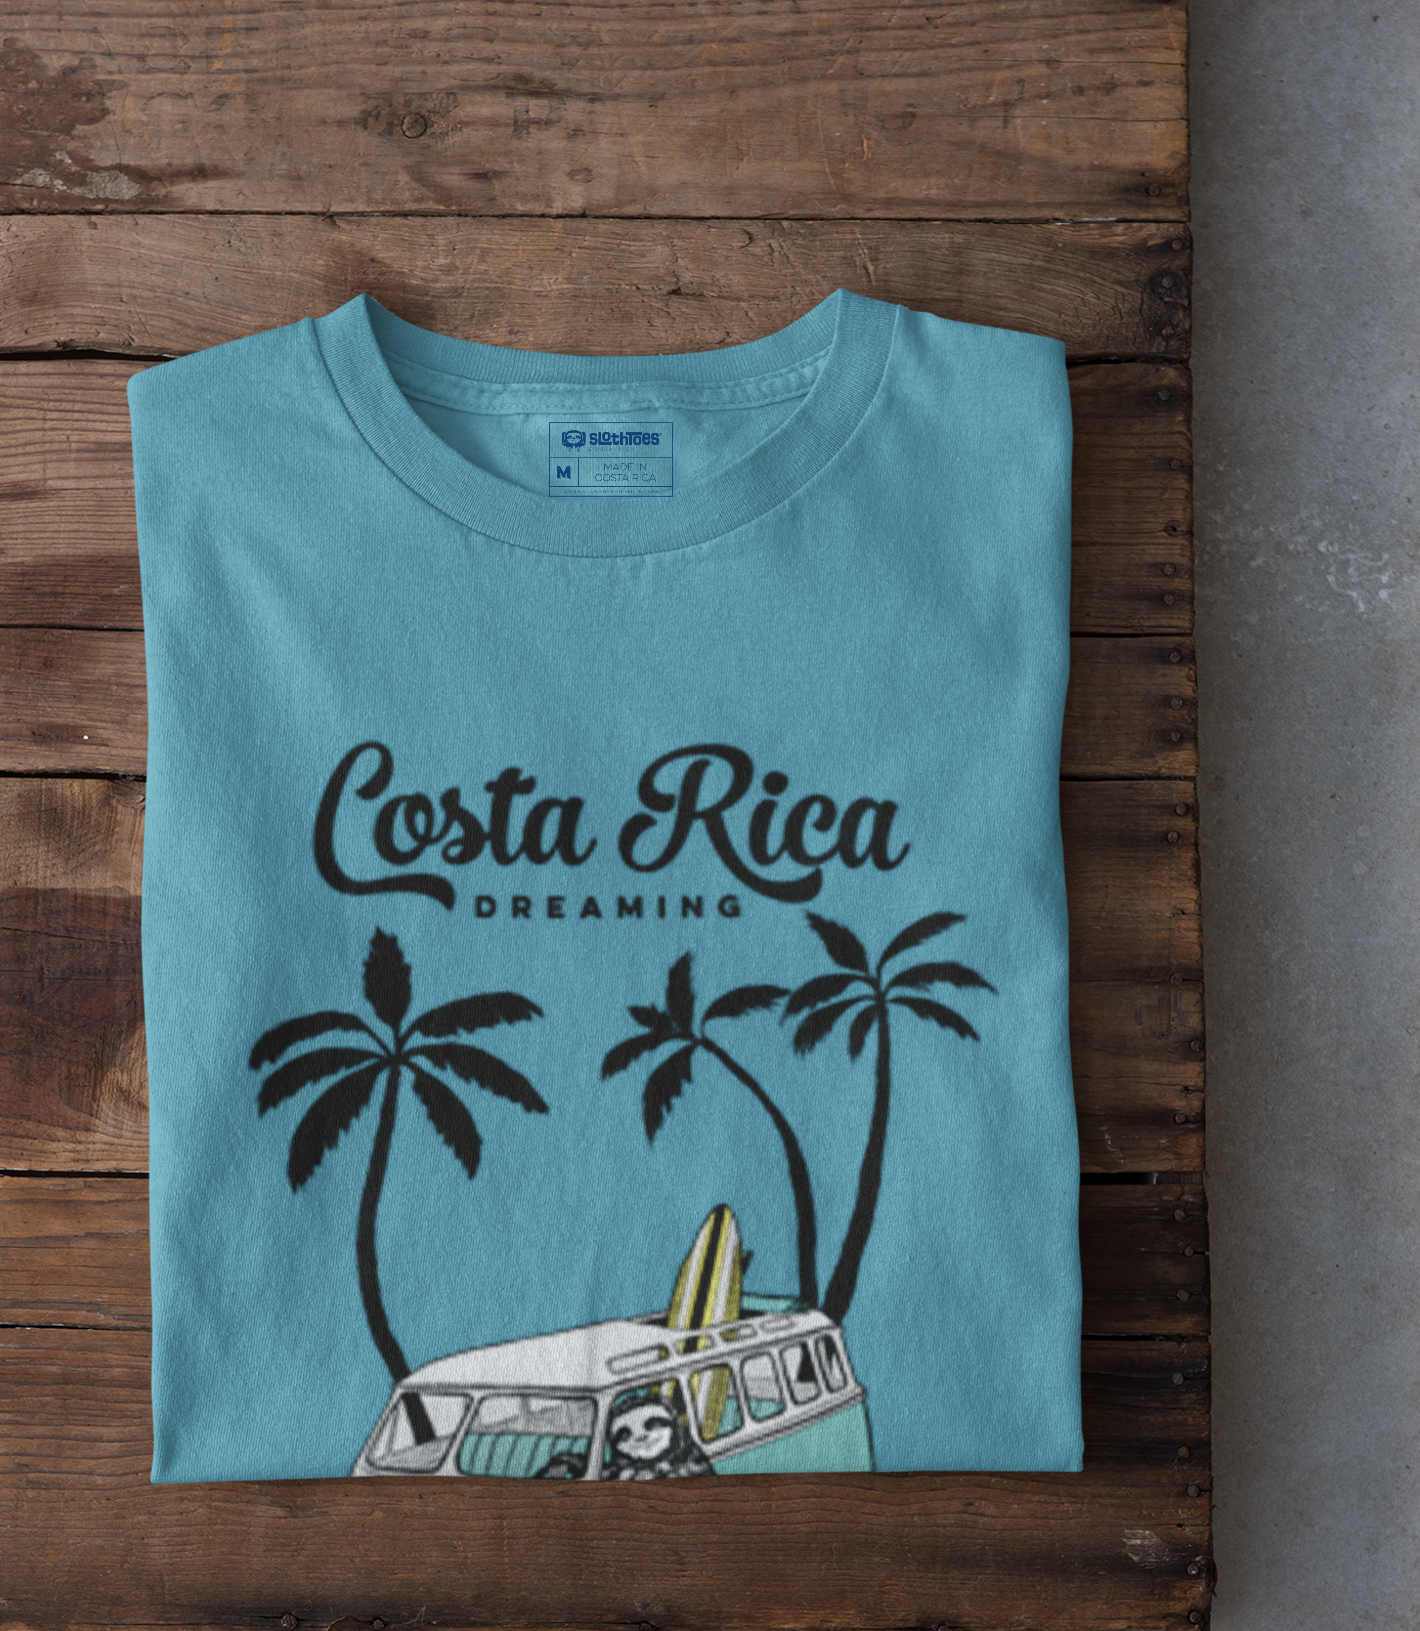 Costa Rica Dreaming Men's Short Sleeve Tee